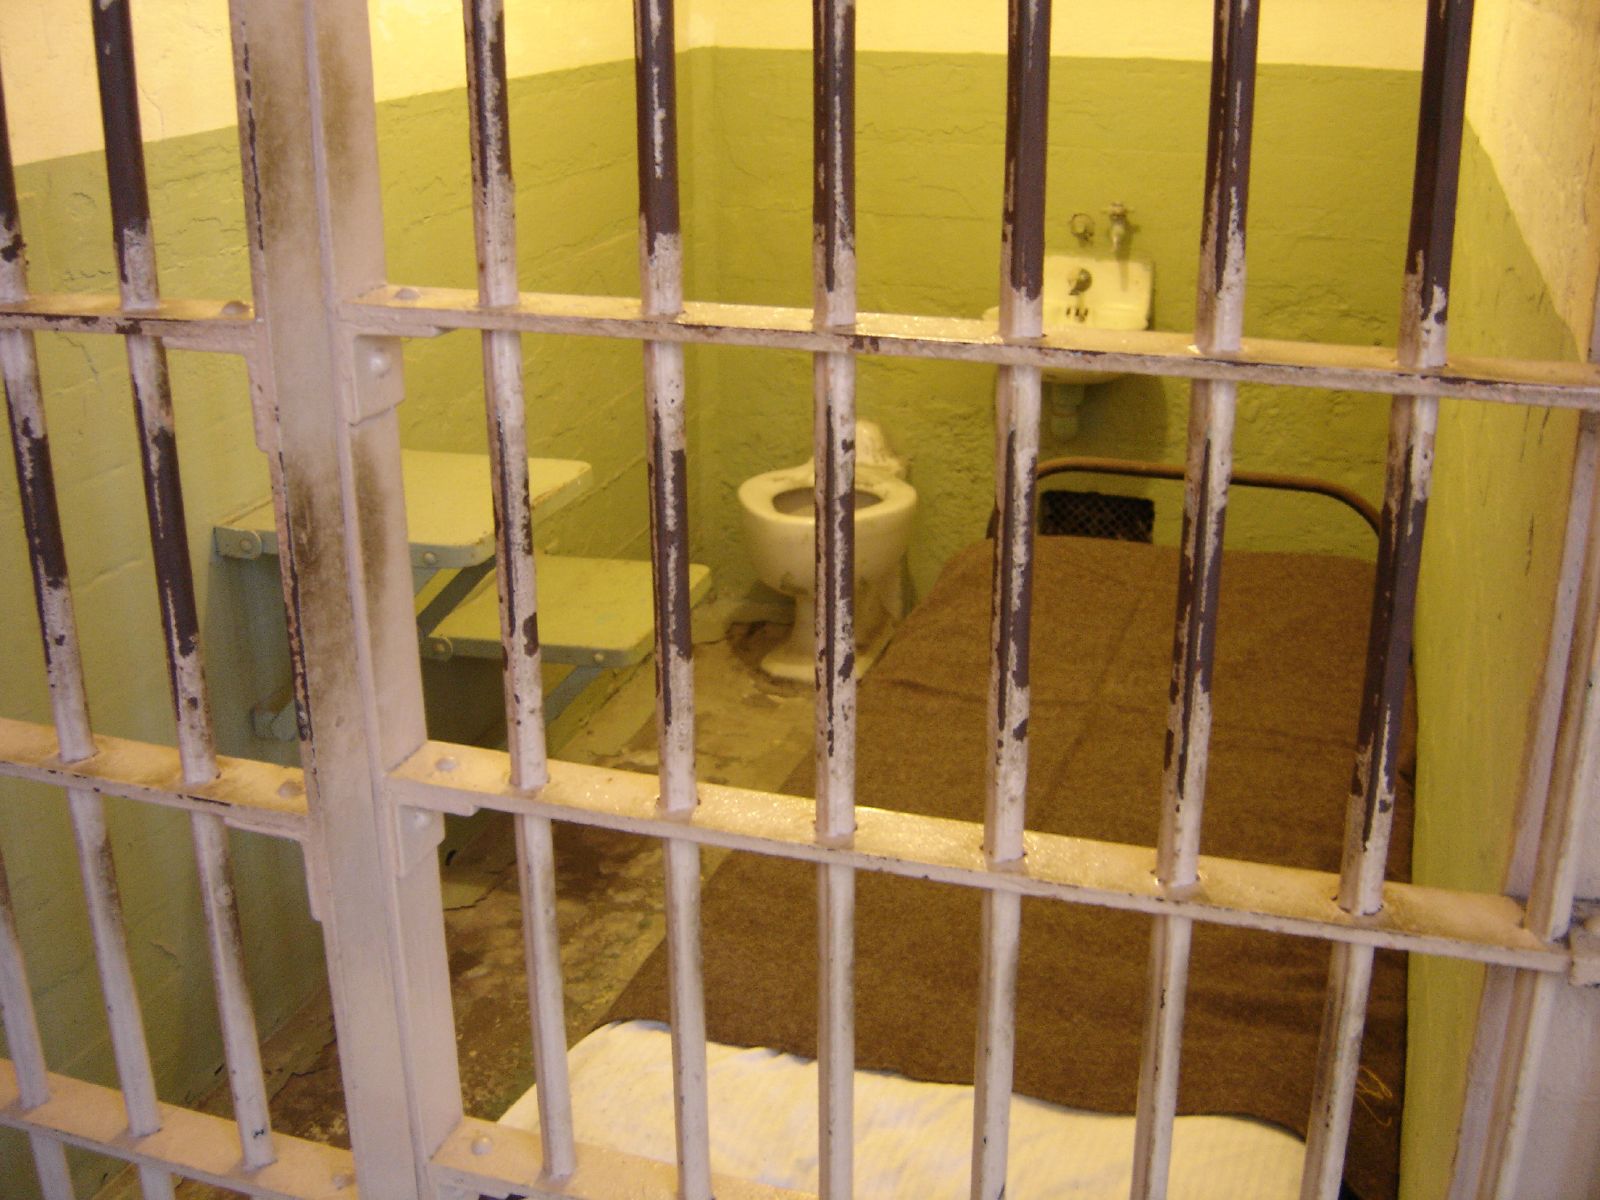 Prison cell description essay